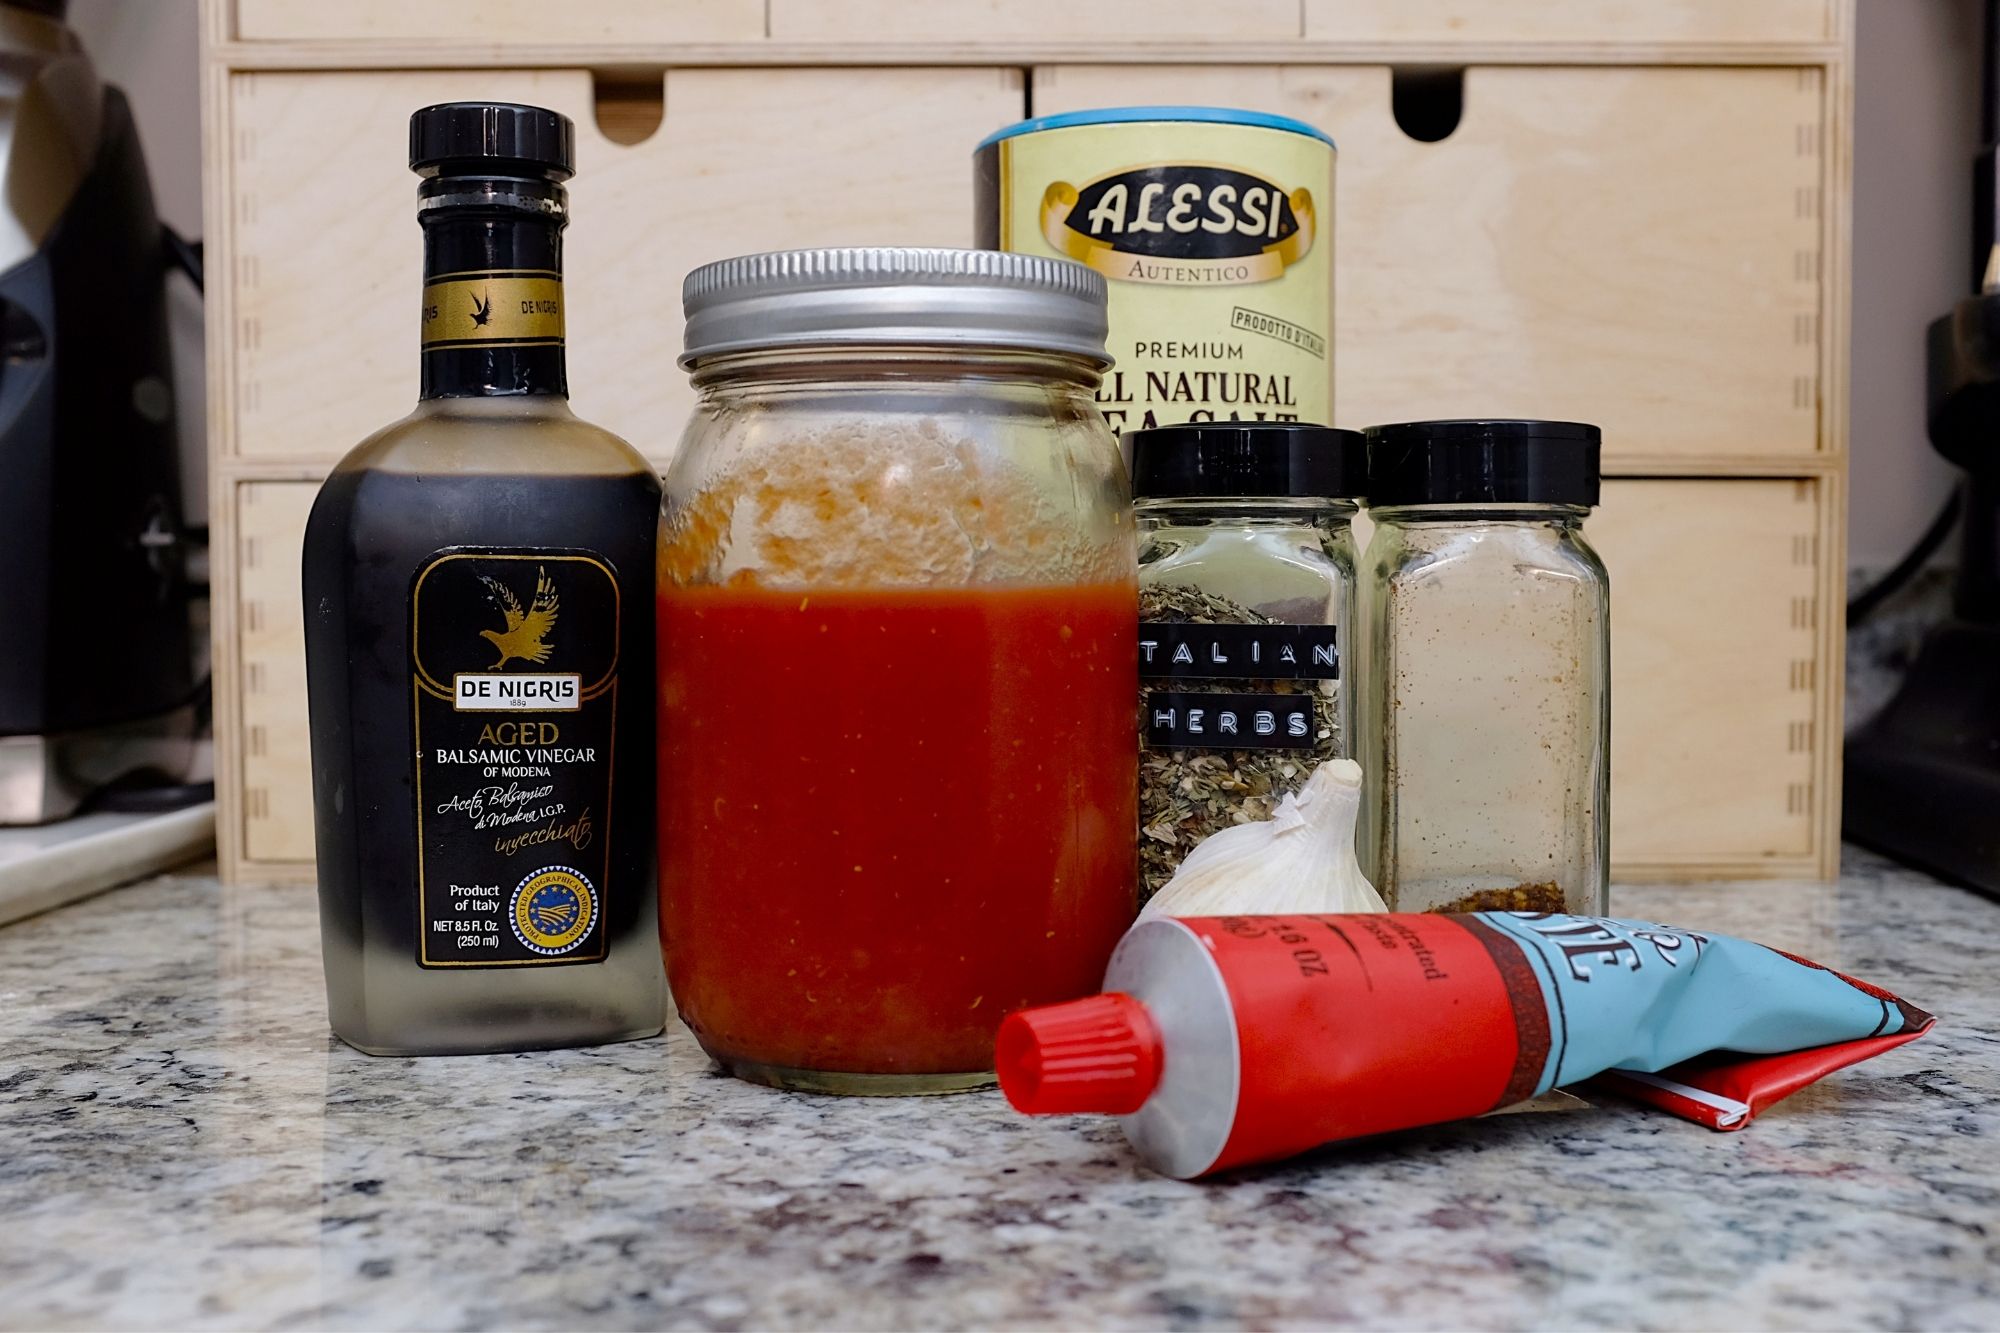 sauce ingredients: tomatoes, vinegar, tomato paste, red pepper flakes, Italian seasoning, and salt